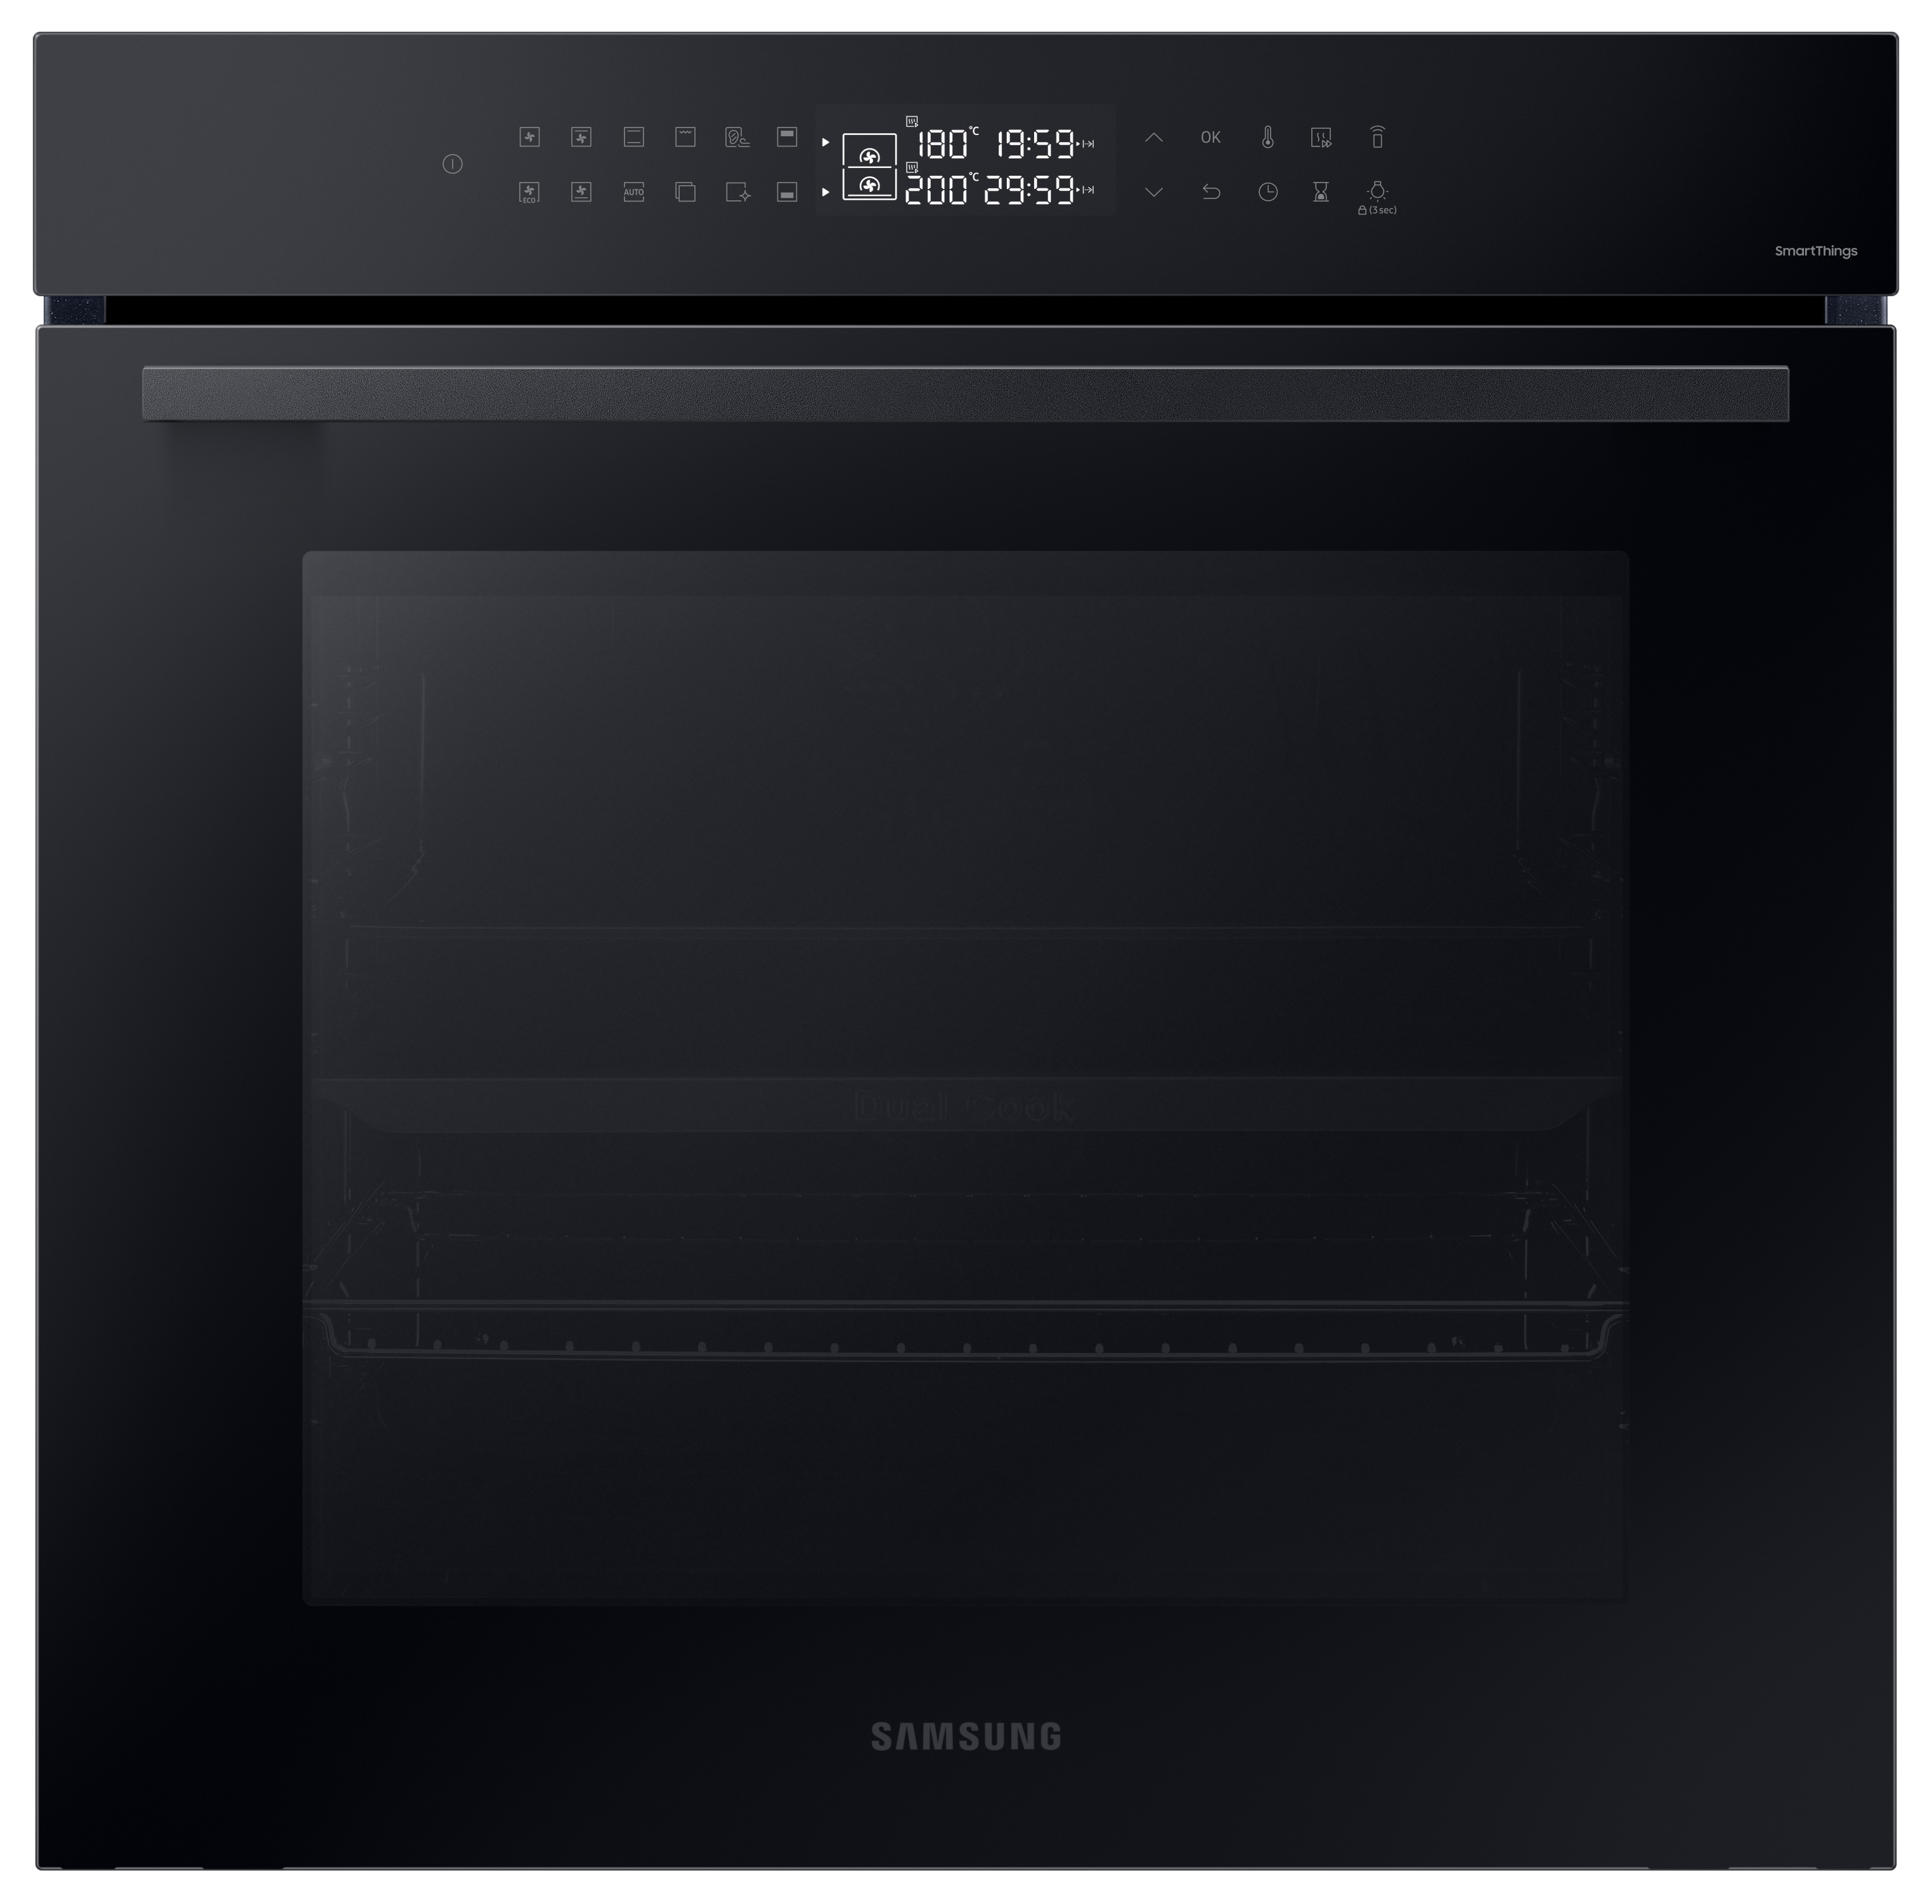 Samsung NV7B42503AK/U4 A+ Series 4 Dual Cook Smart Oven - Black Glass